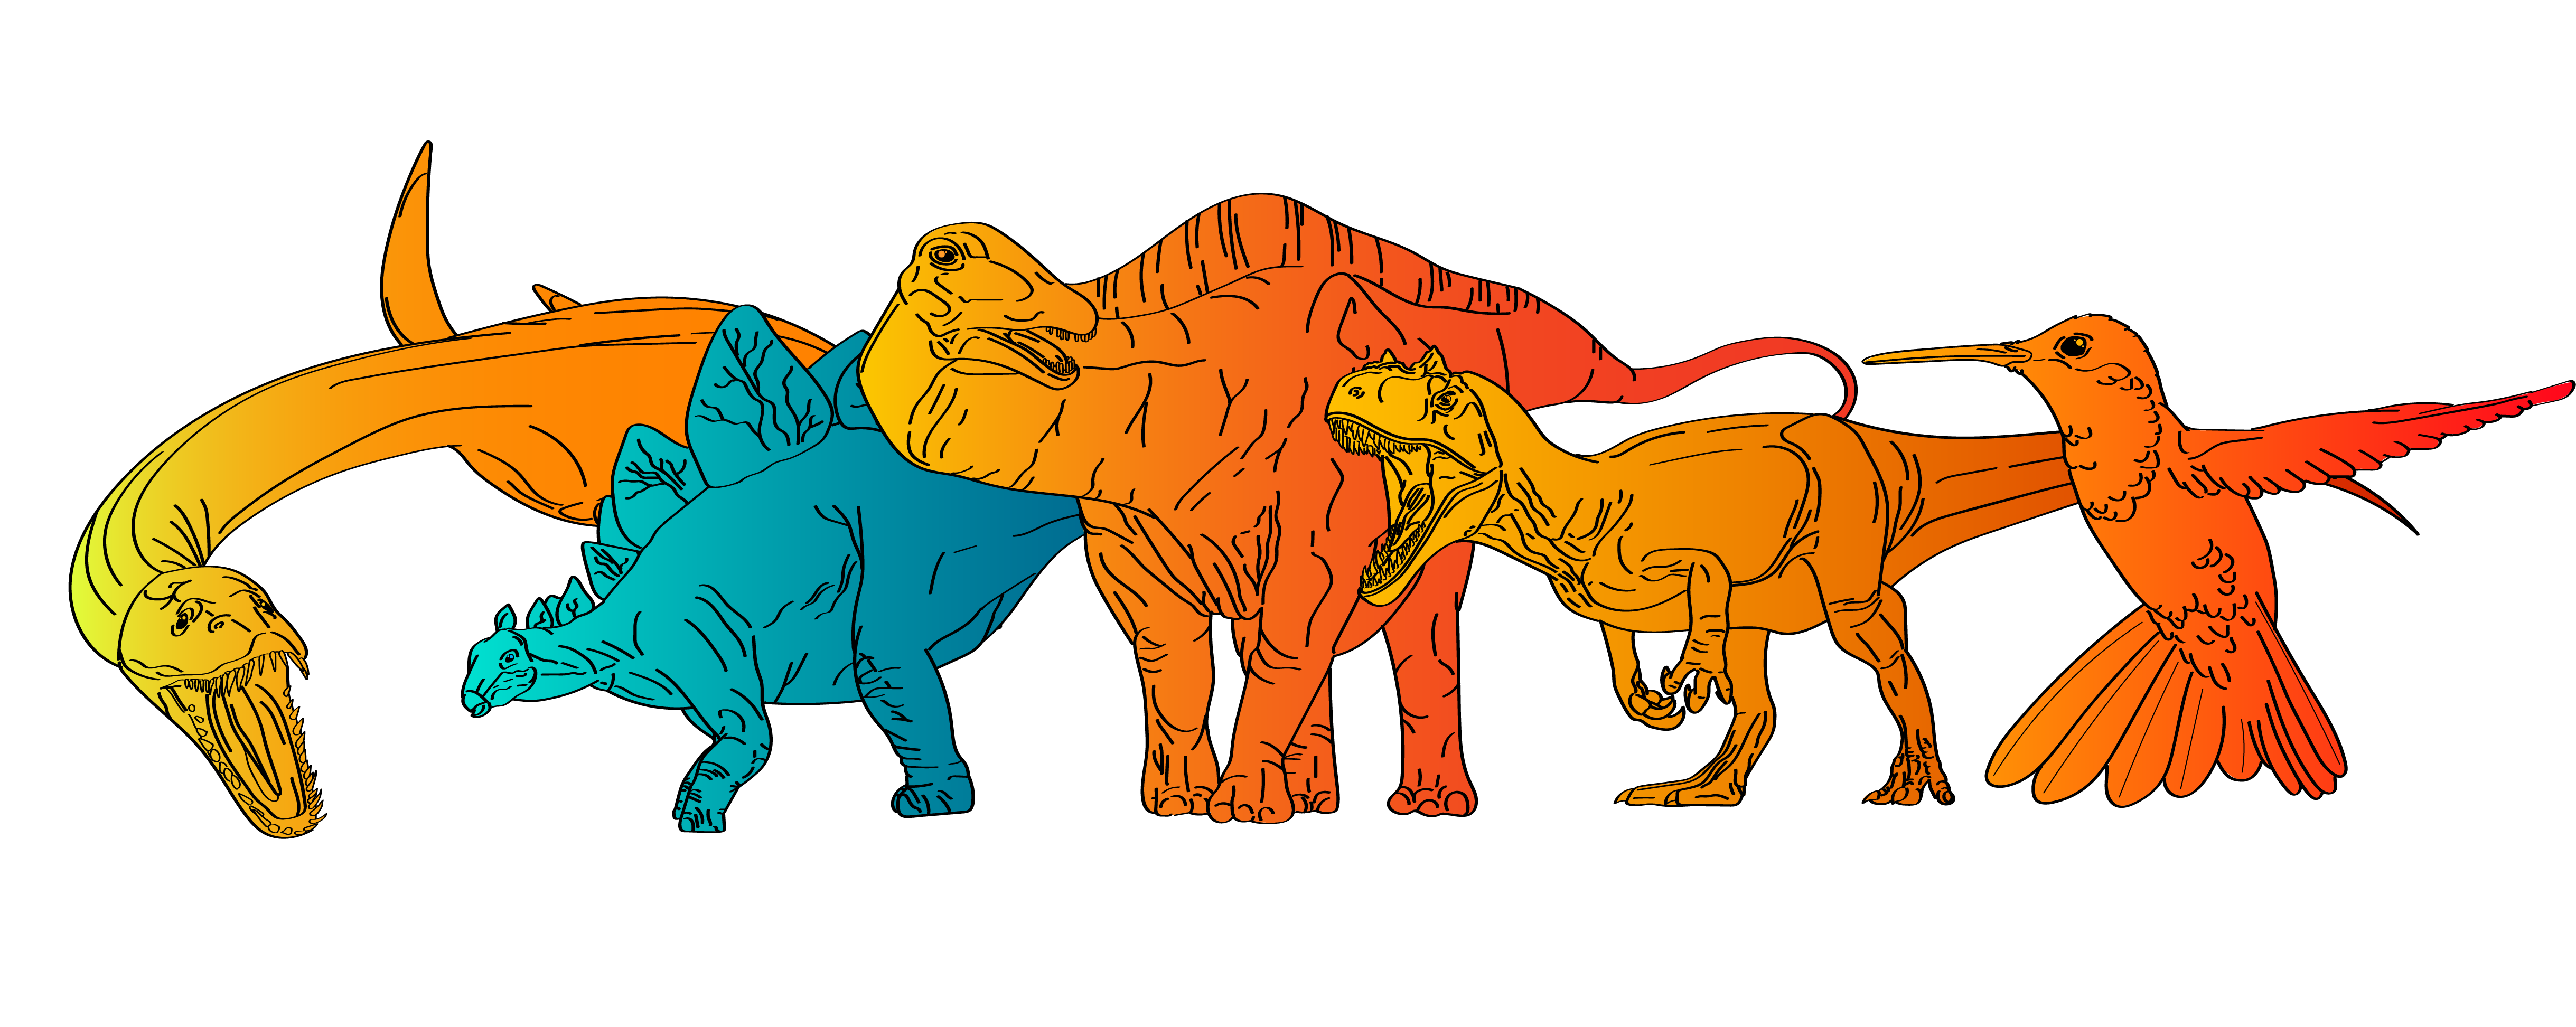 imagen 1. dinosaur metabolism